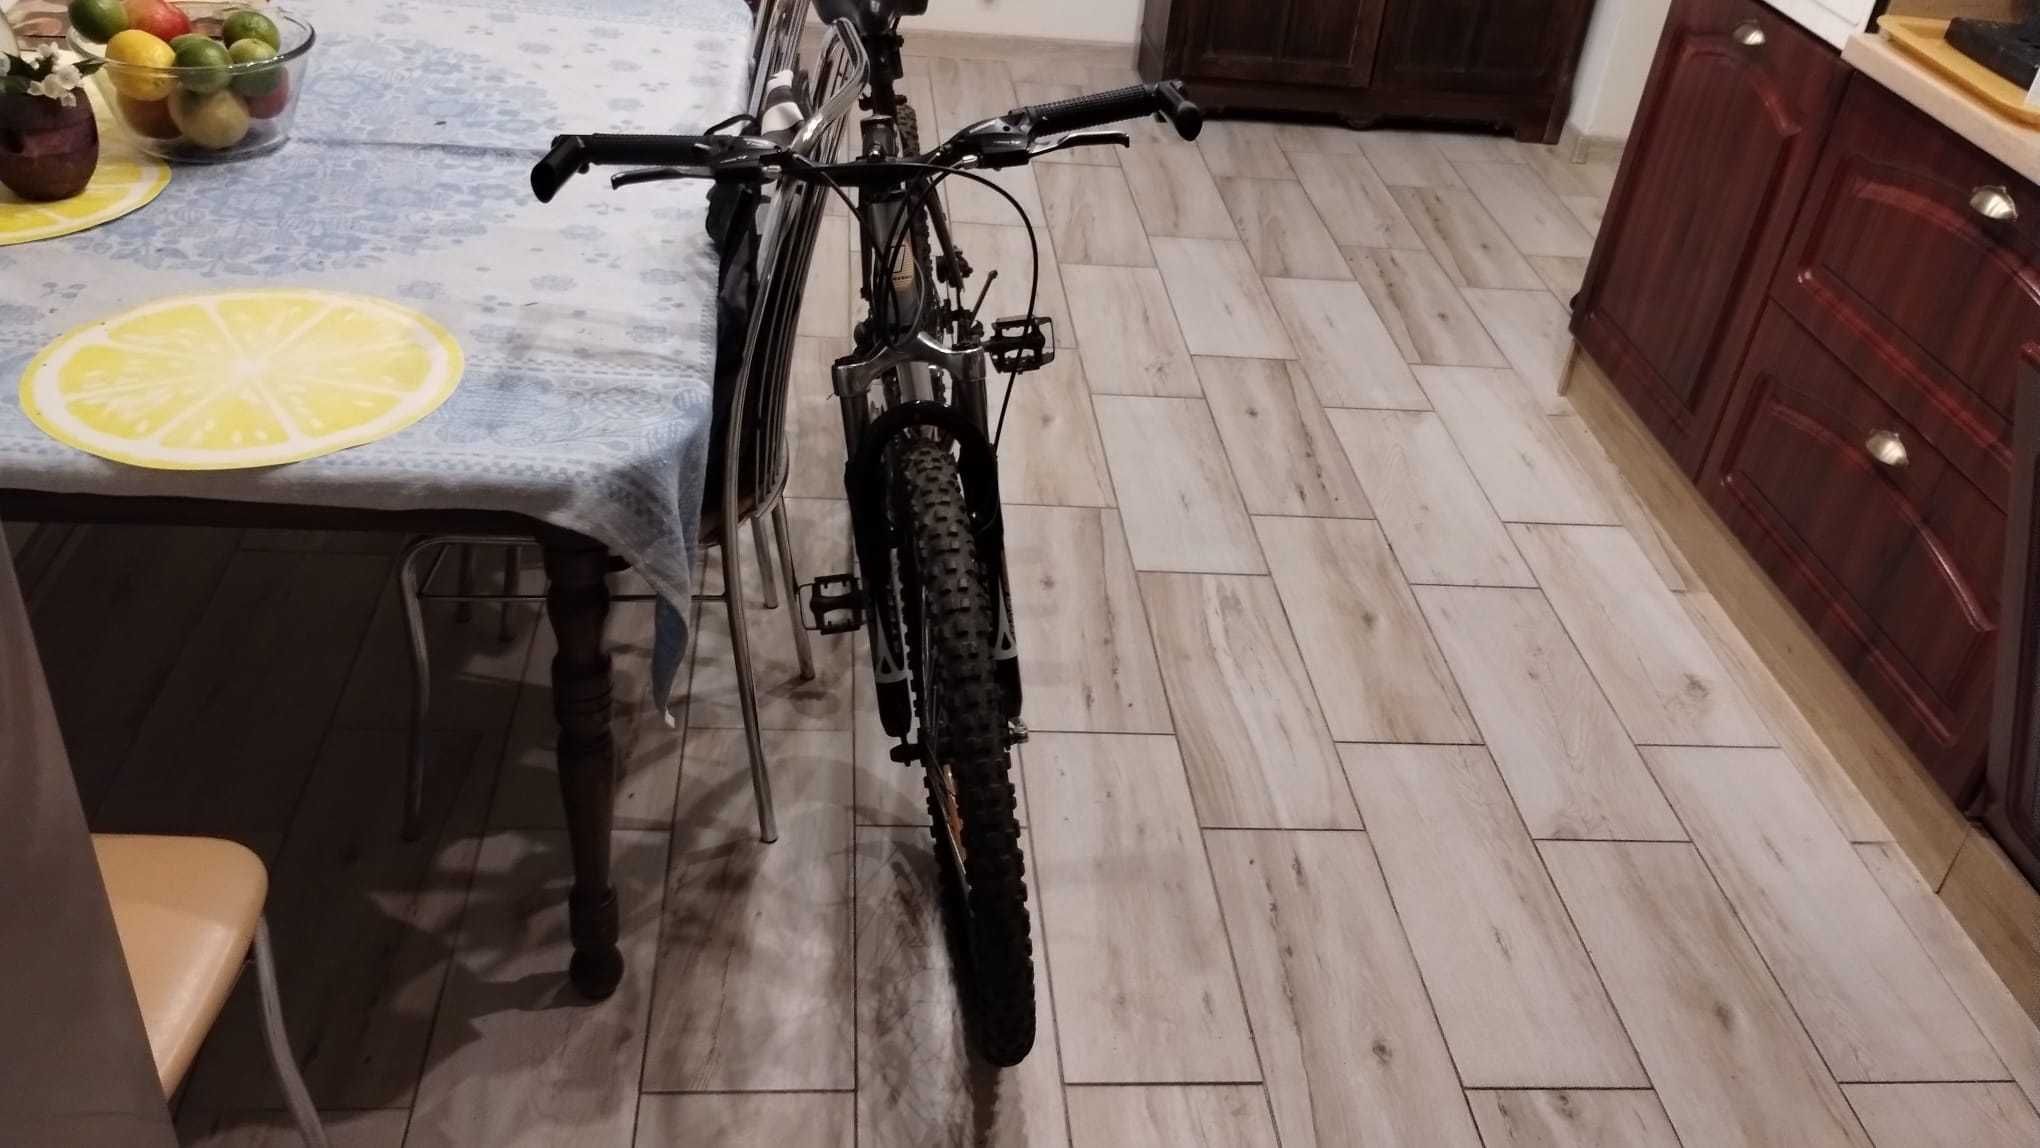 Bicicleta issimo rsl 300